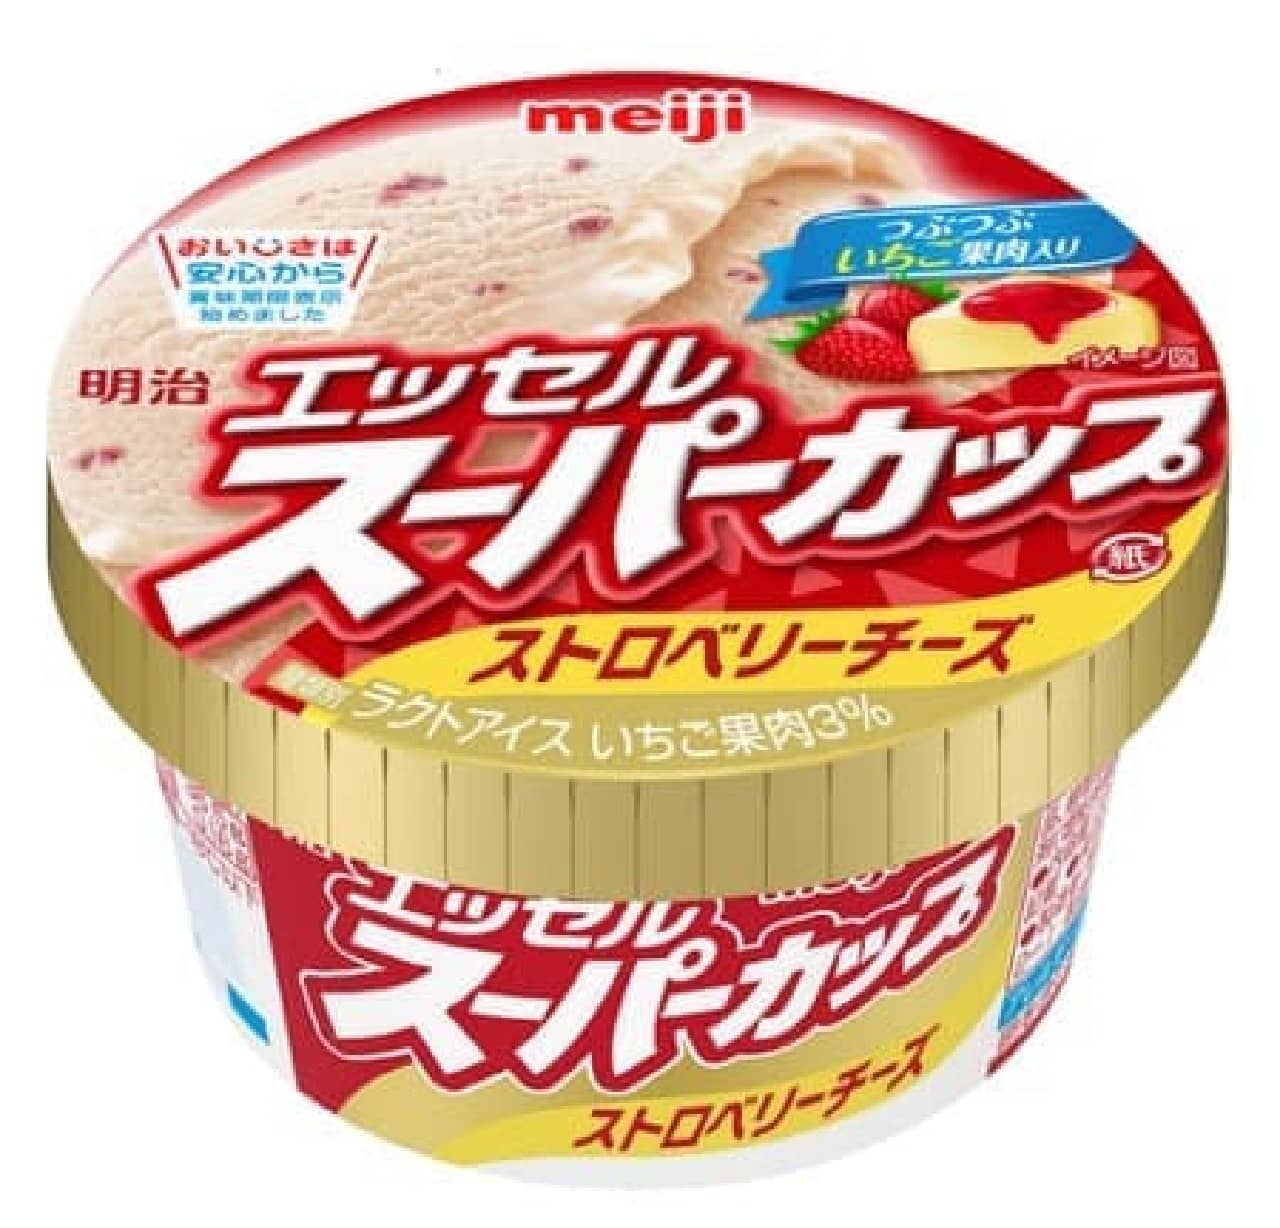 Meiji Essel Super Cup Strawberry Cheese